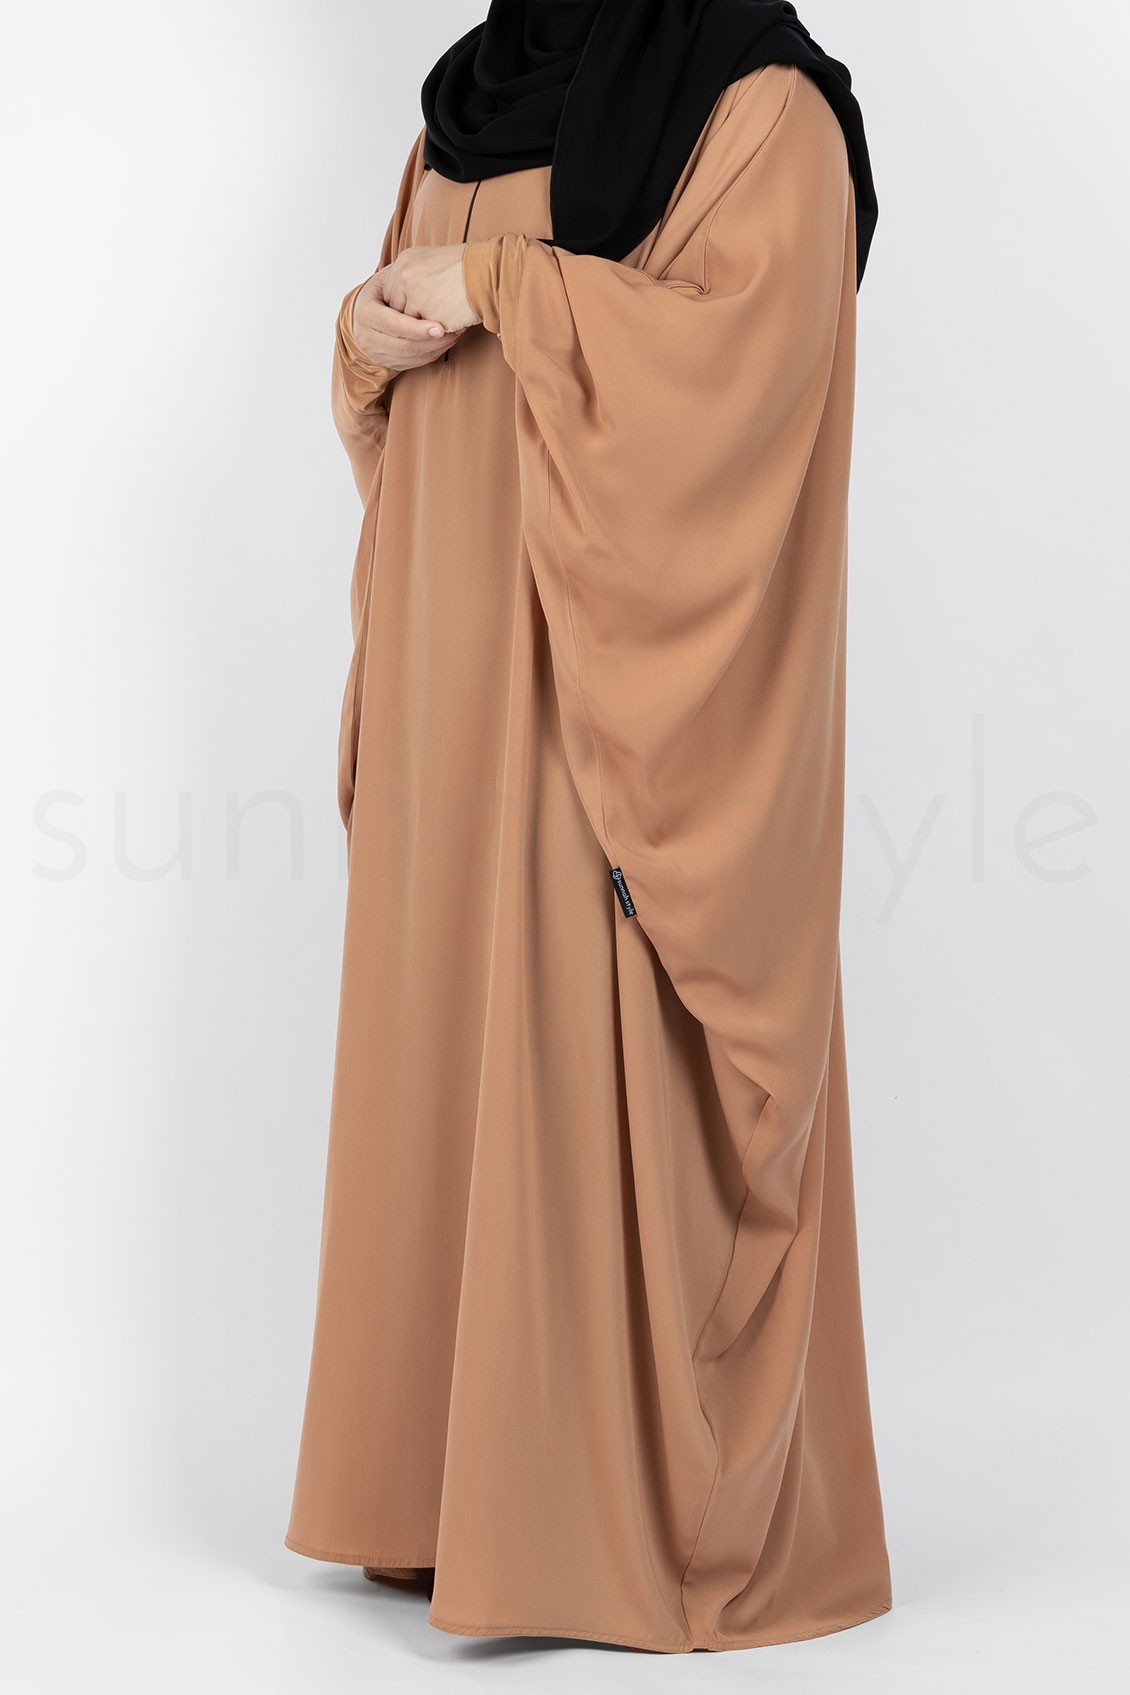 Sunnah Style Plain Bisht Abaya Apricot